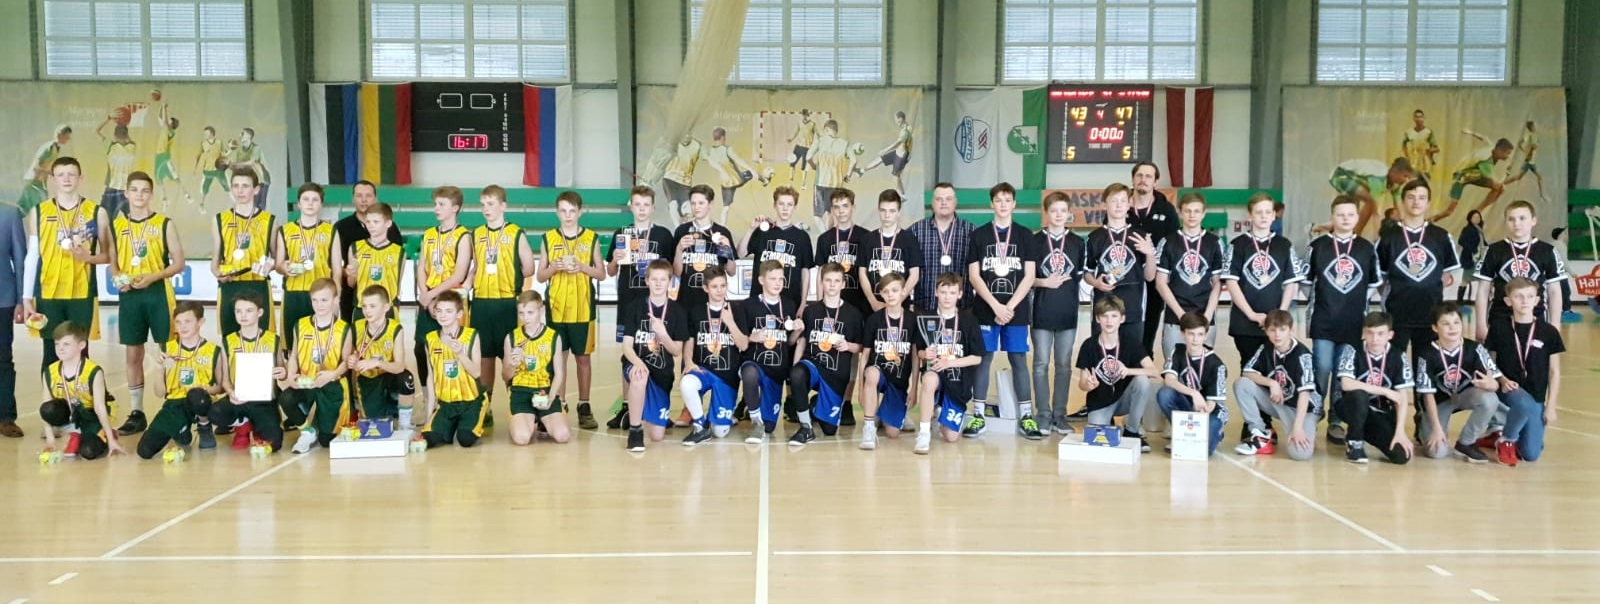 LJBL fināli’2019: U13 grupā uzvar “Rīga/DSN” puiši